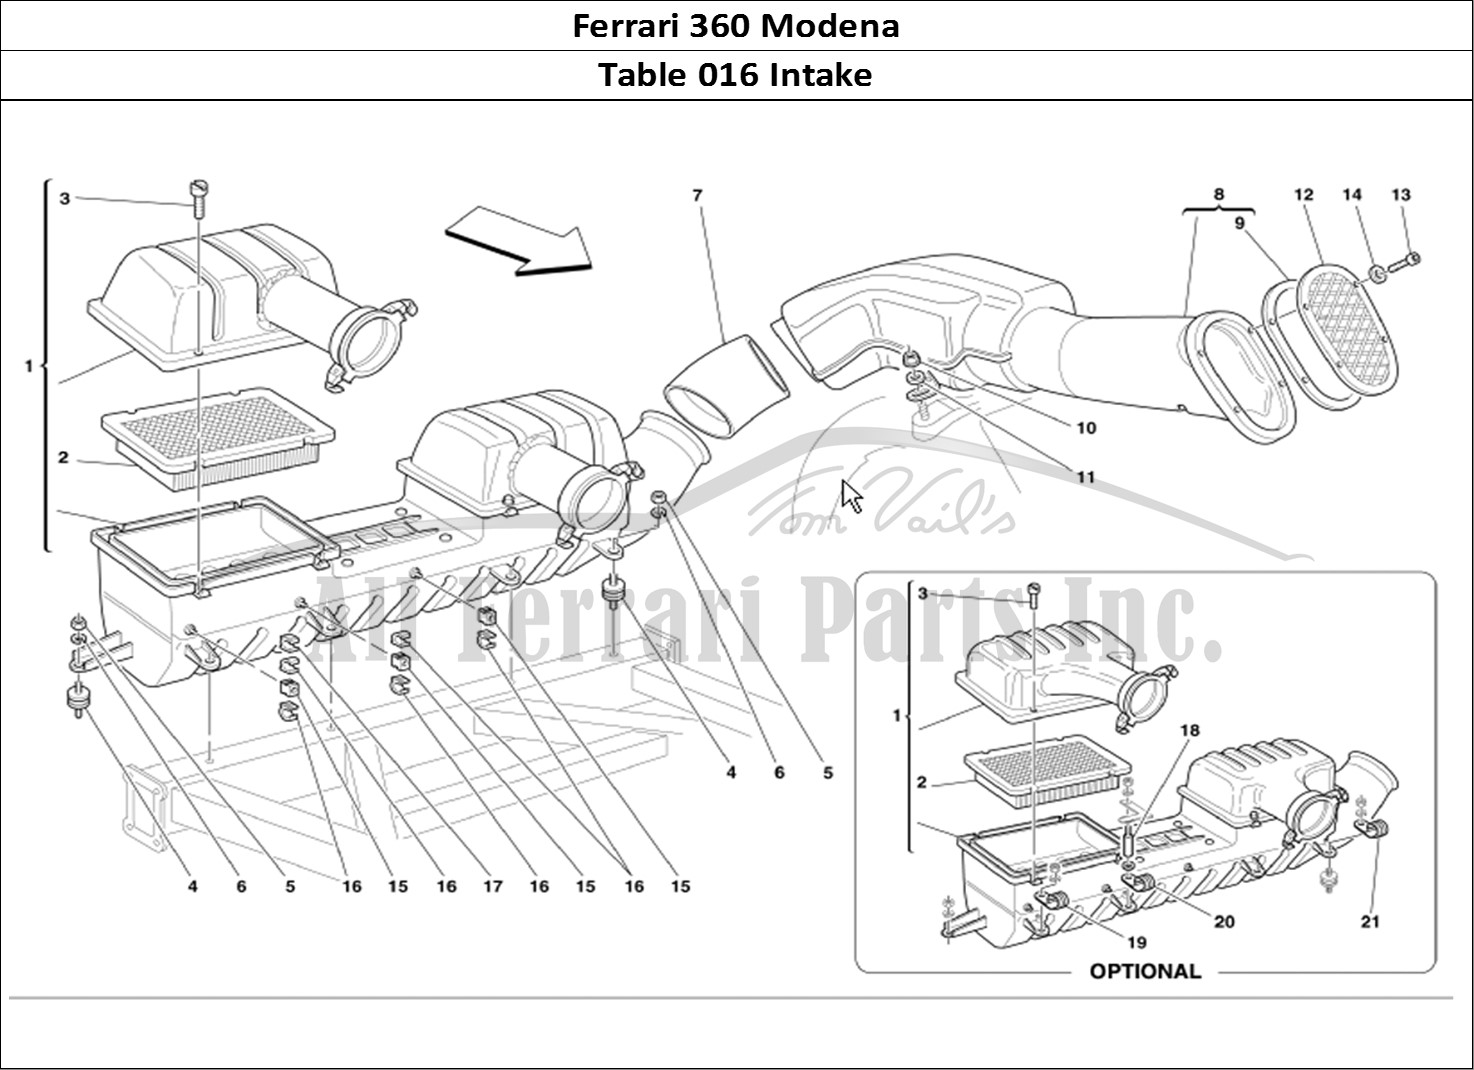 Ferrari Parts Ferrari 360 Modena Page 016 Air Intake